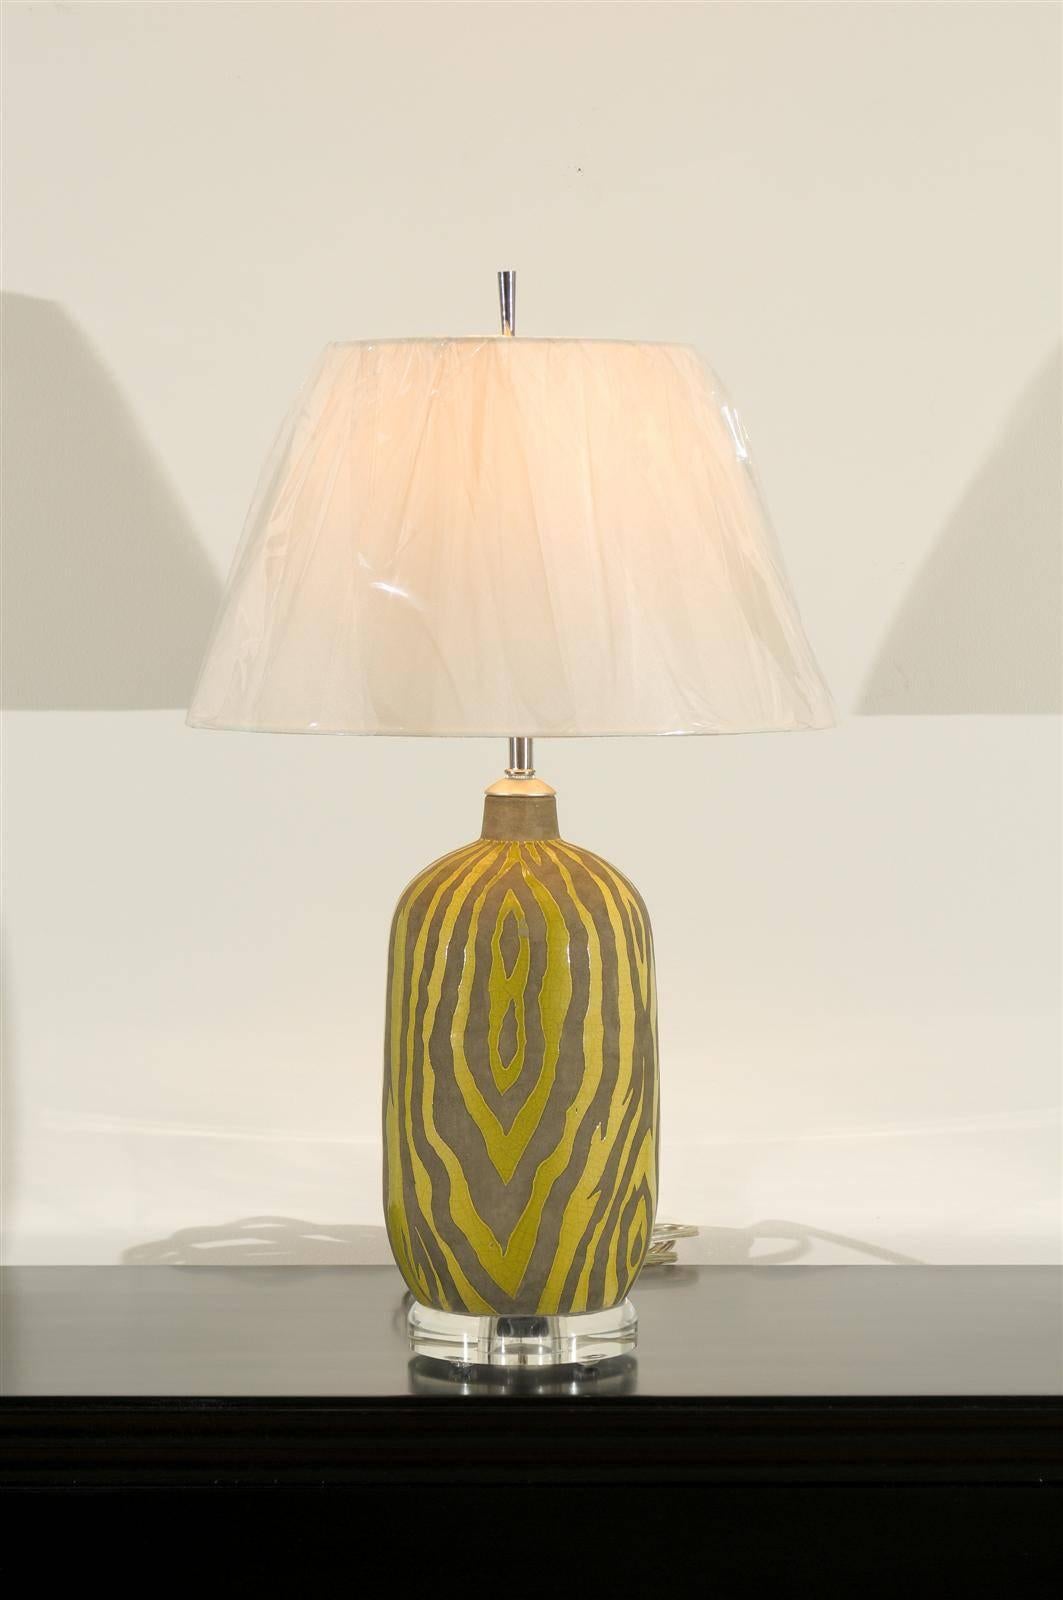 Striking Restored Pair of Vintage Zebra Print Ceramic Lamps in Citrus For Sale 1